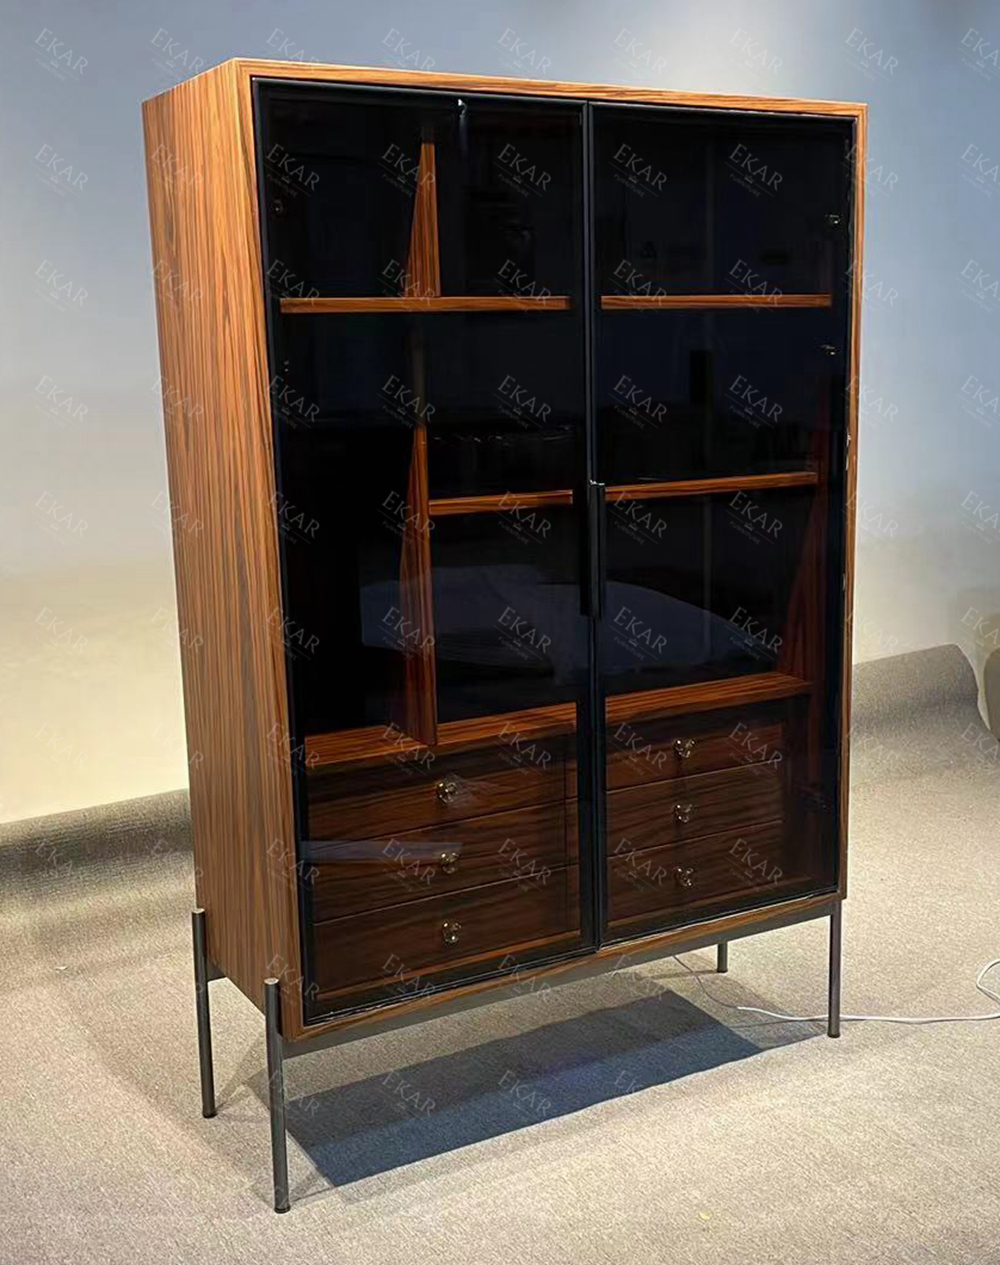 New design modern Book Cabinet